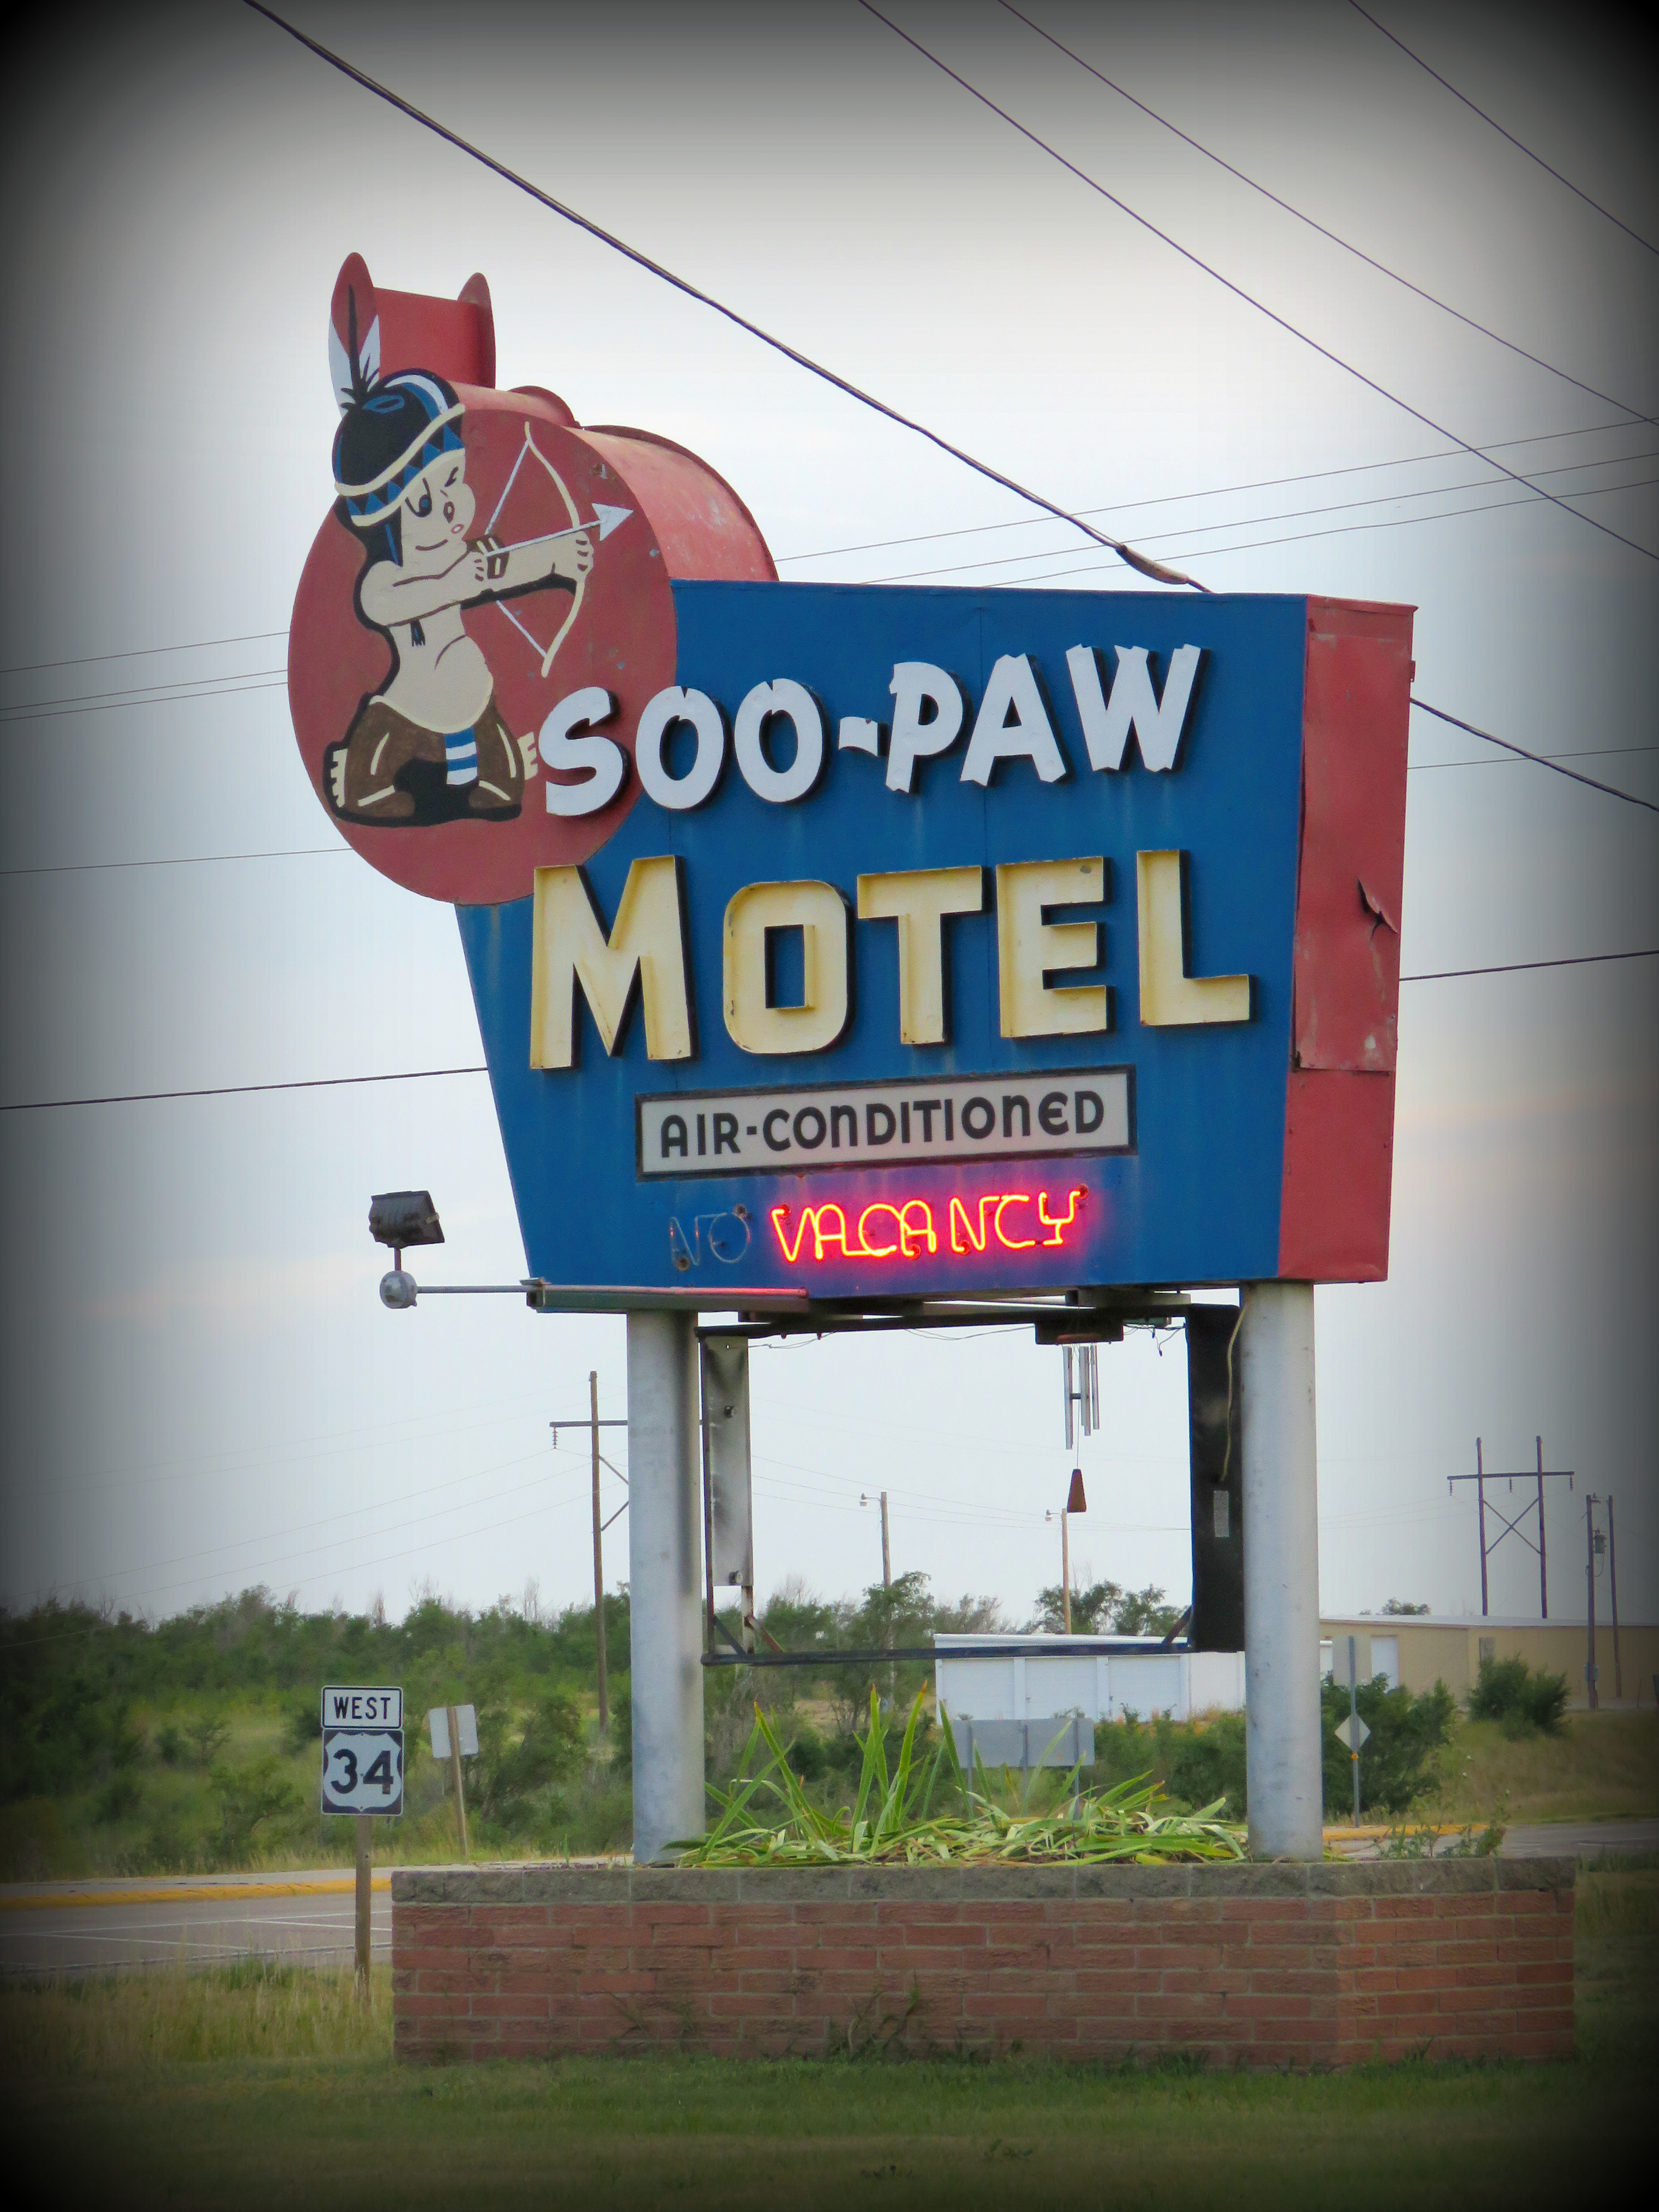 Soo-Paw Motel - U.S. 34, Trenton, Nebraska U.S.A. - August 25, 2016